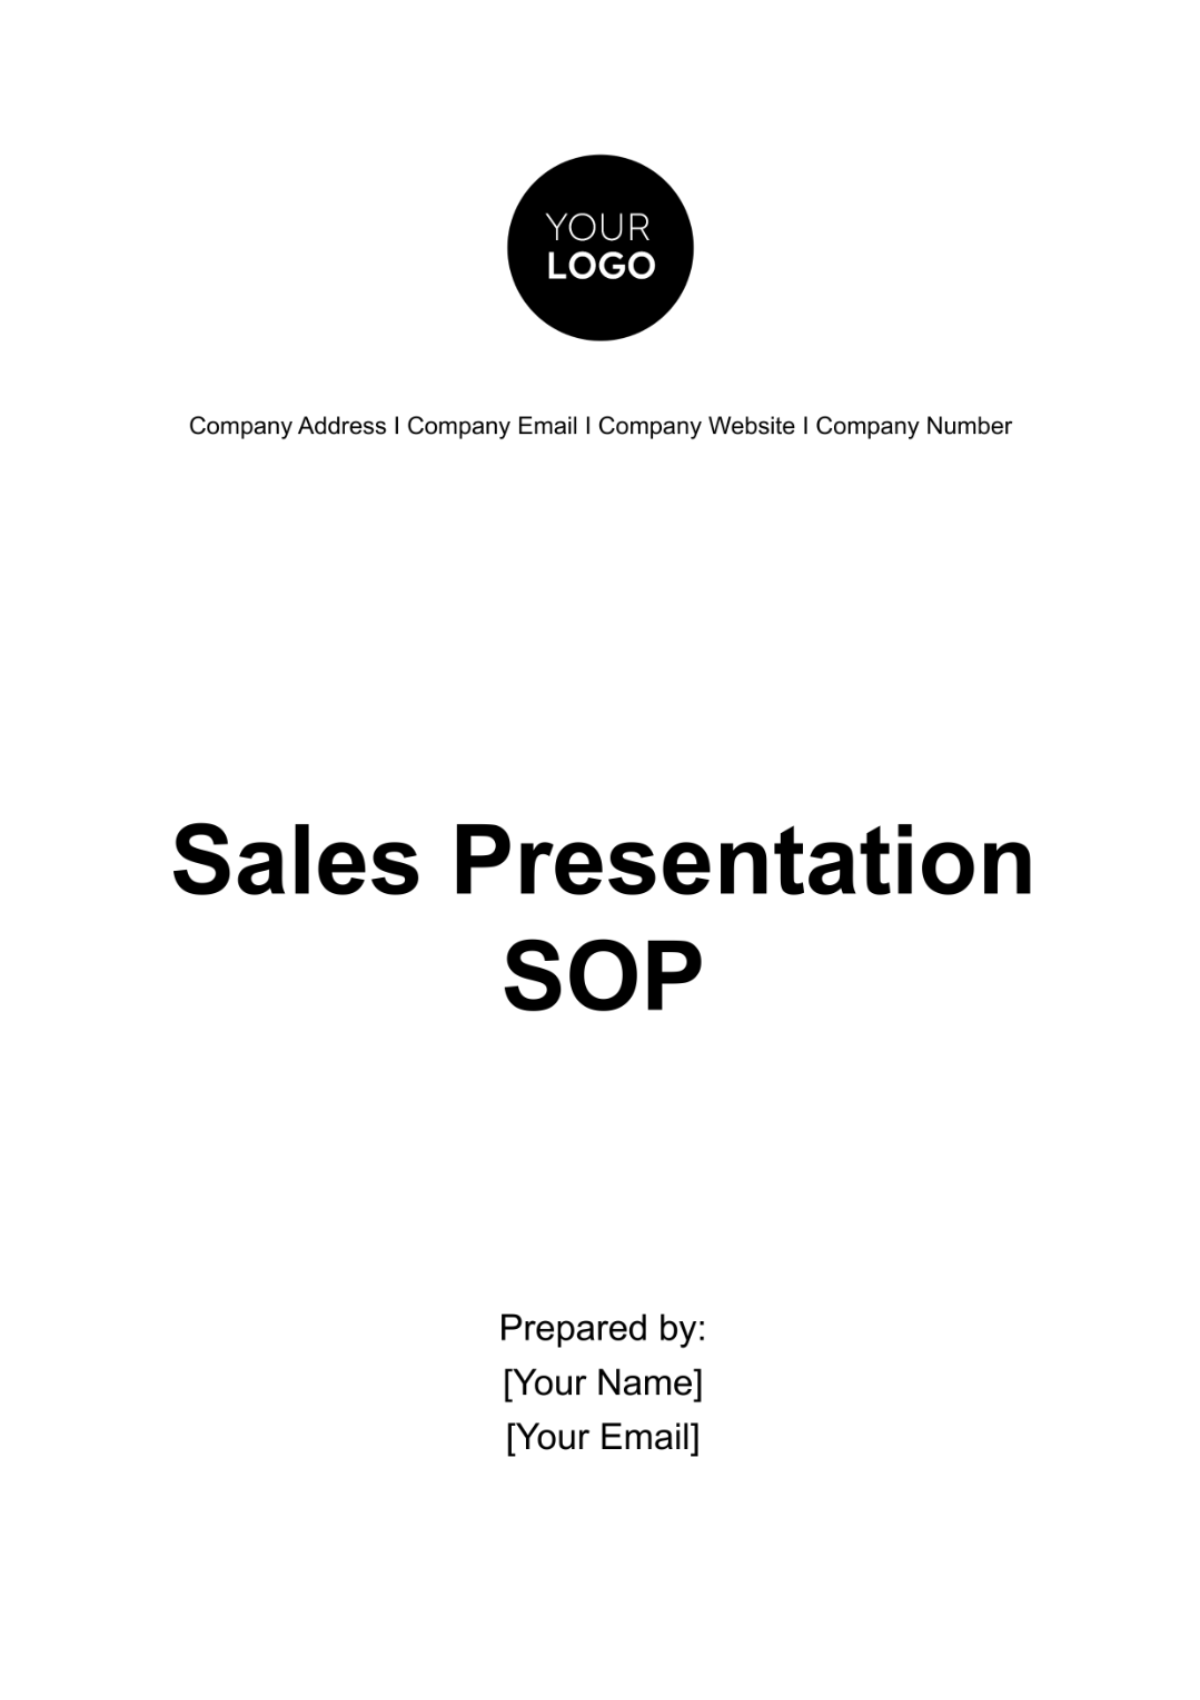 Free Sales Presentation SOP Template